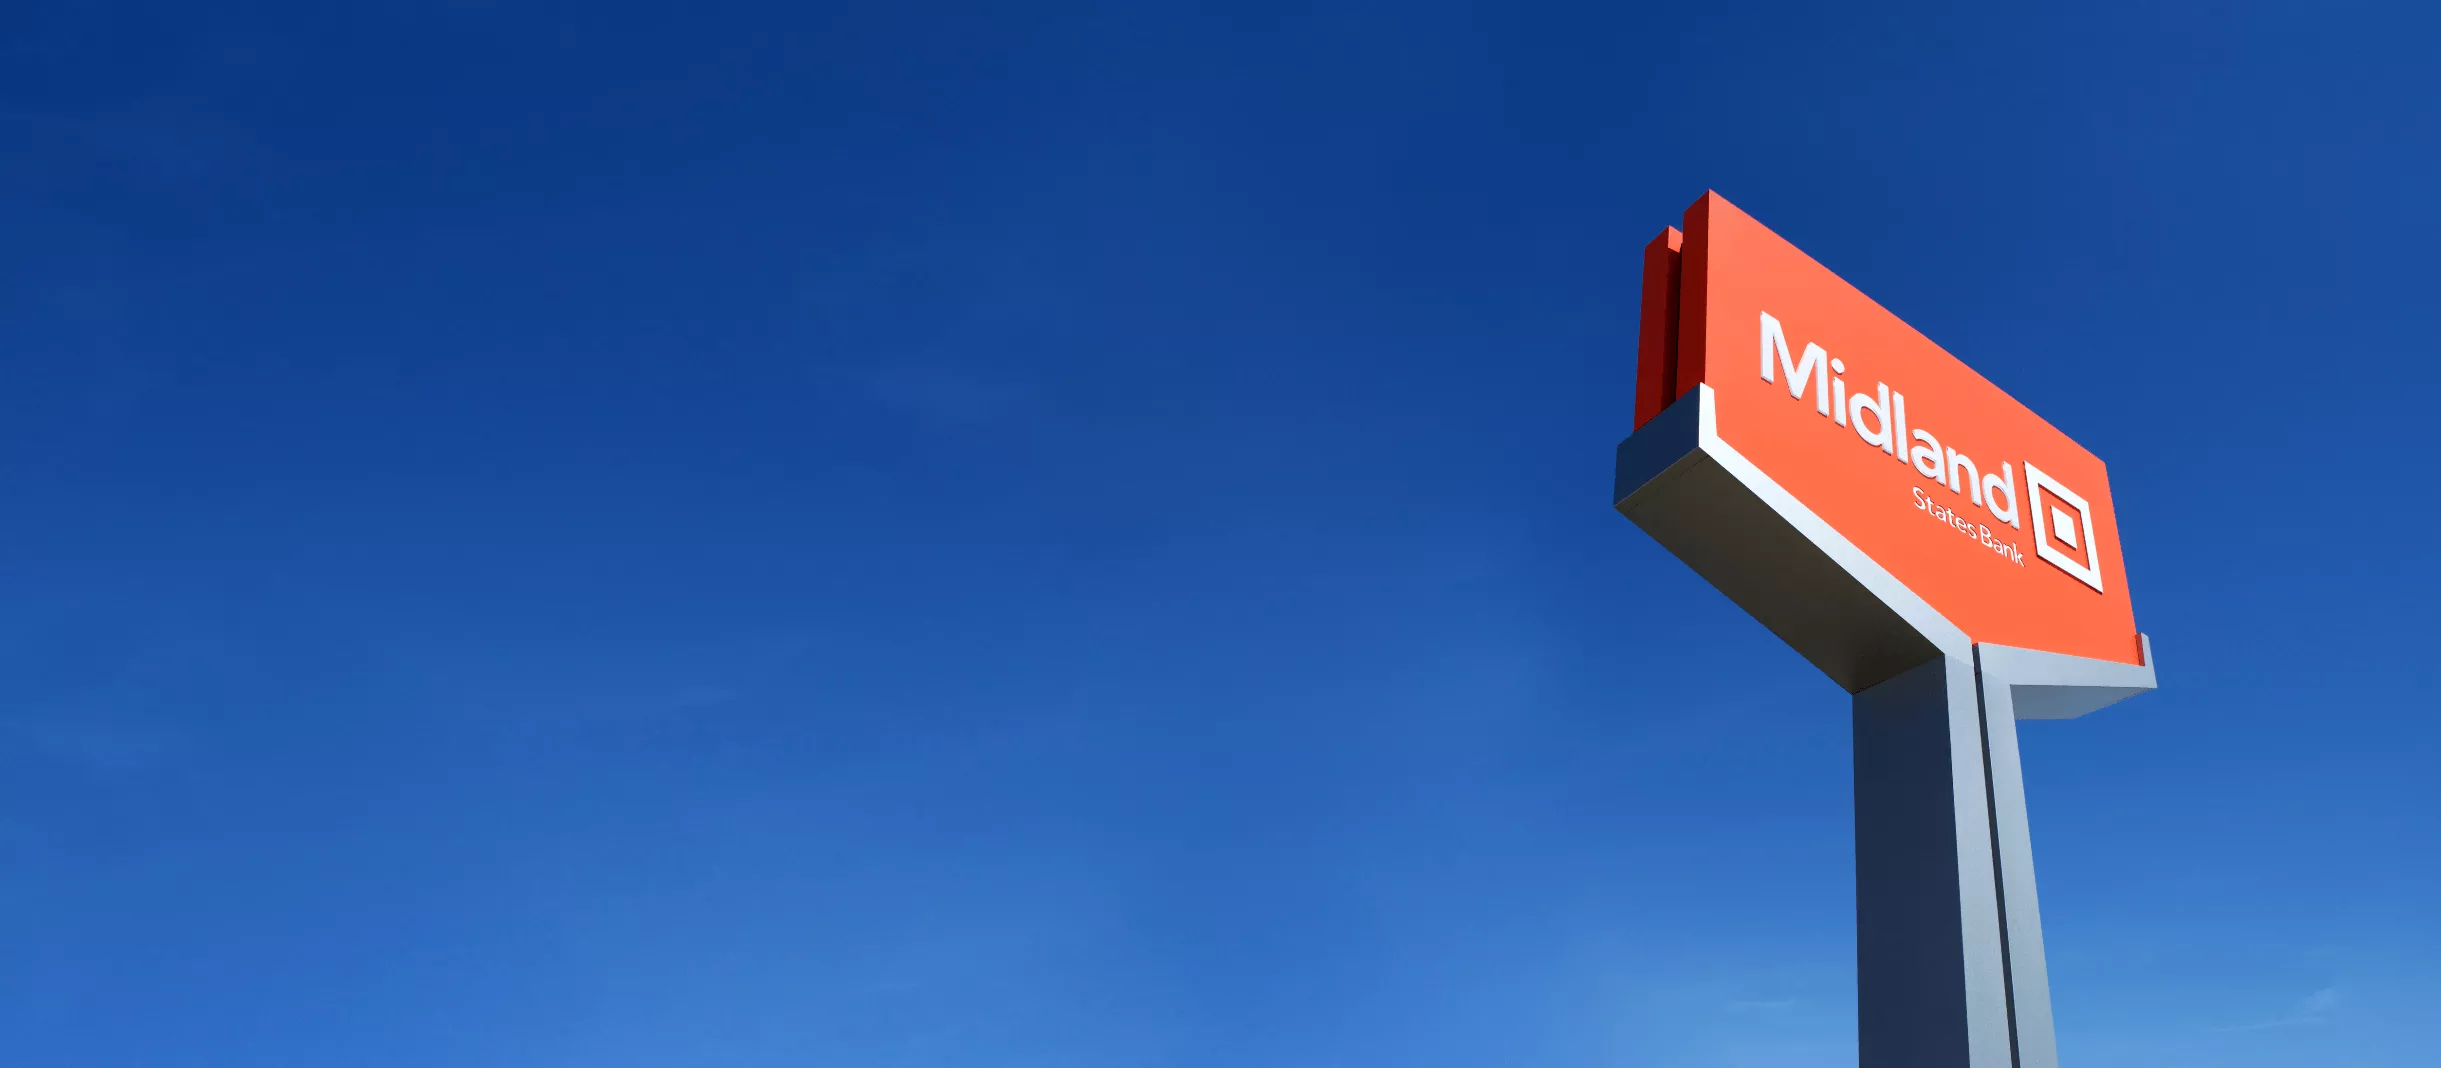 midland states bank sign on blue sky background